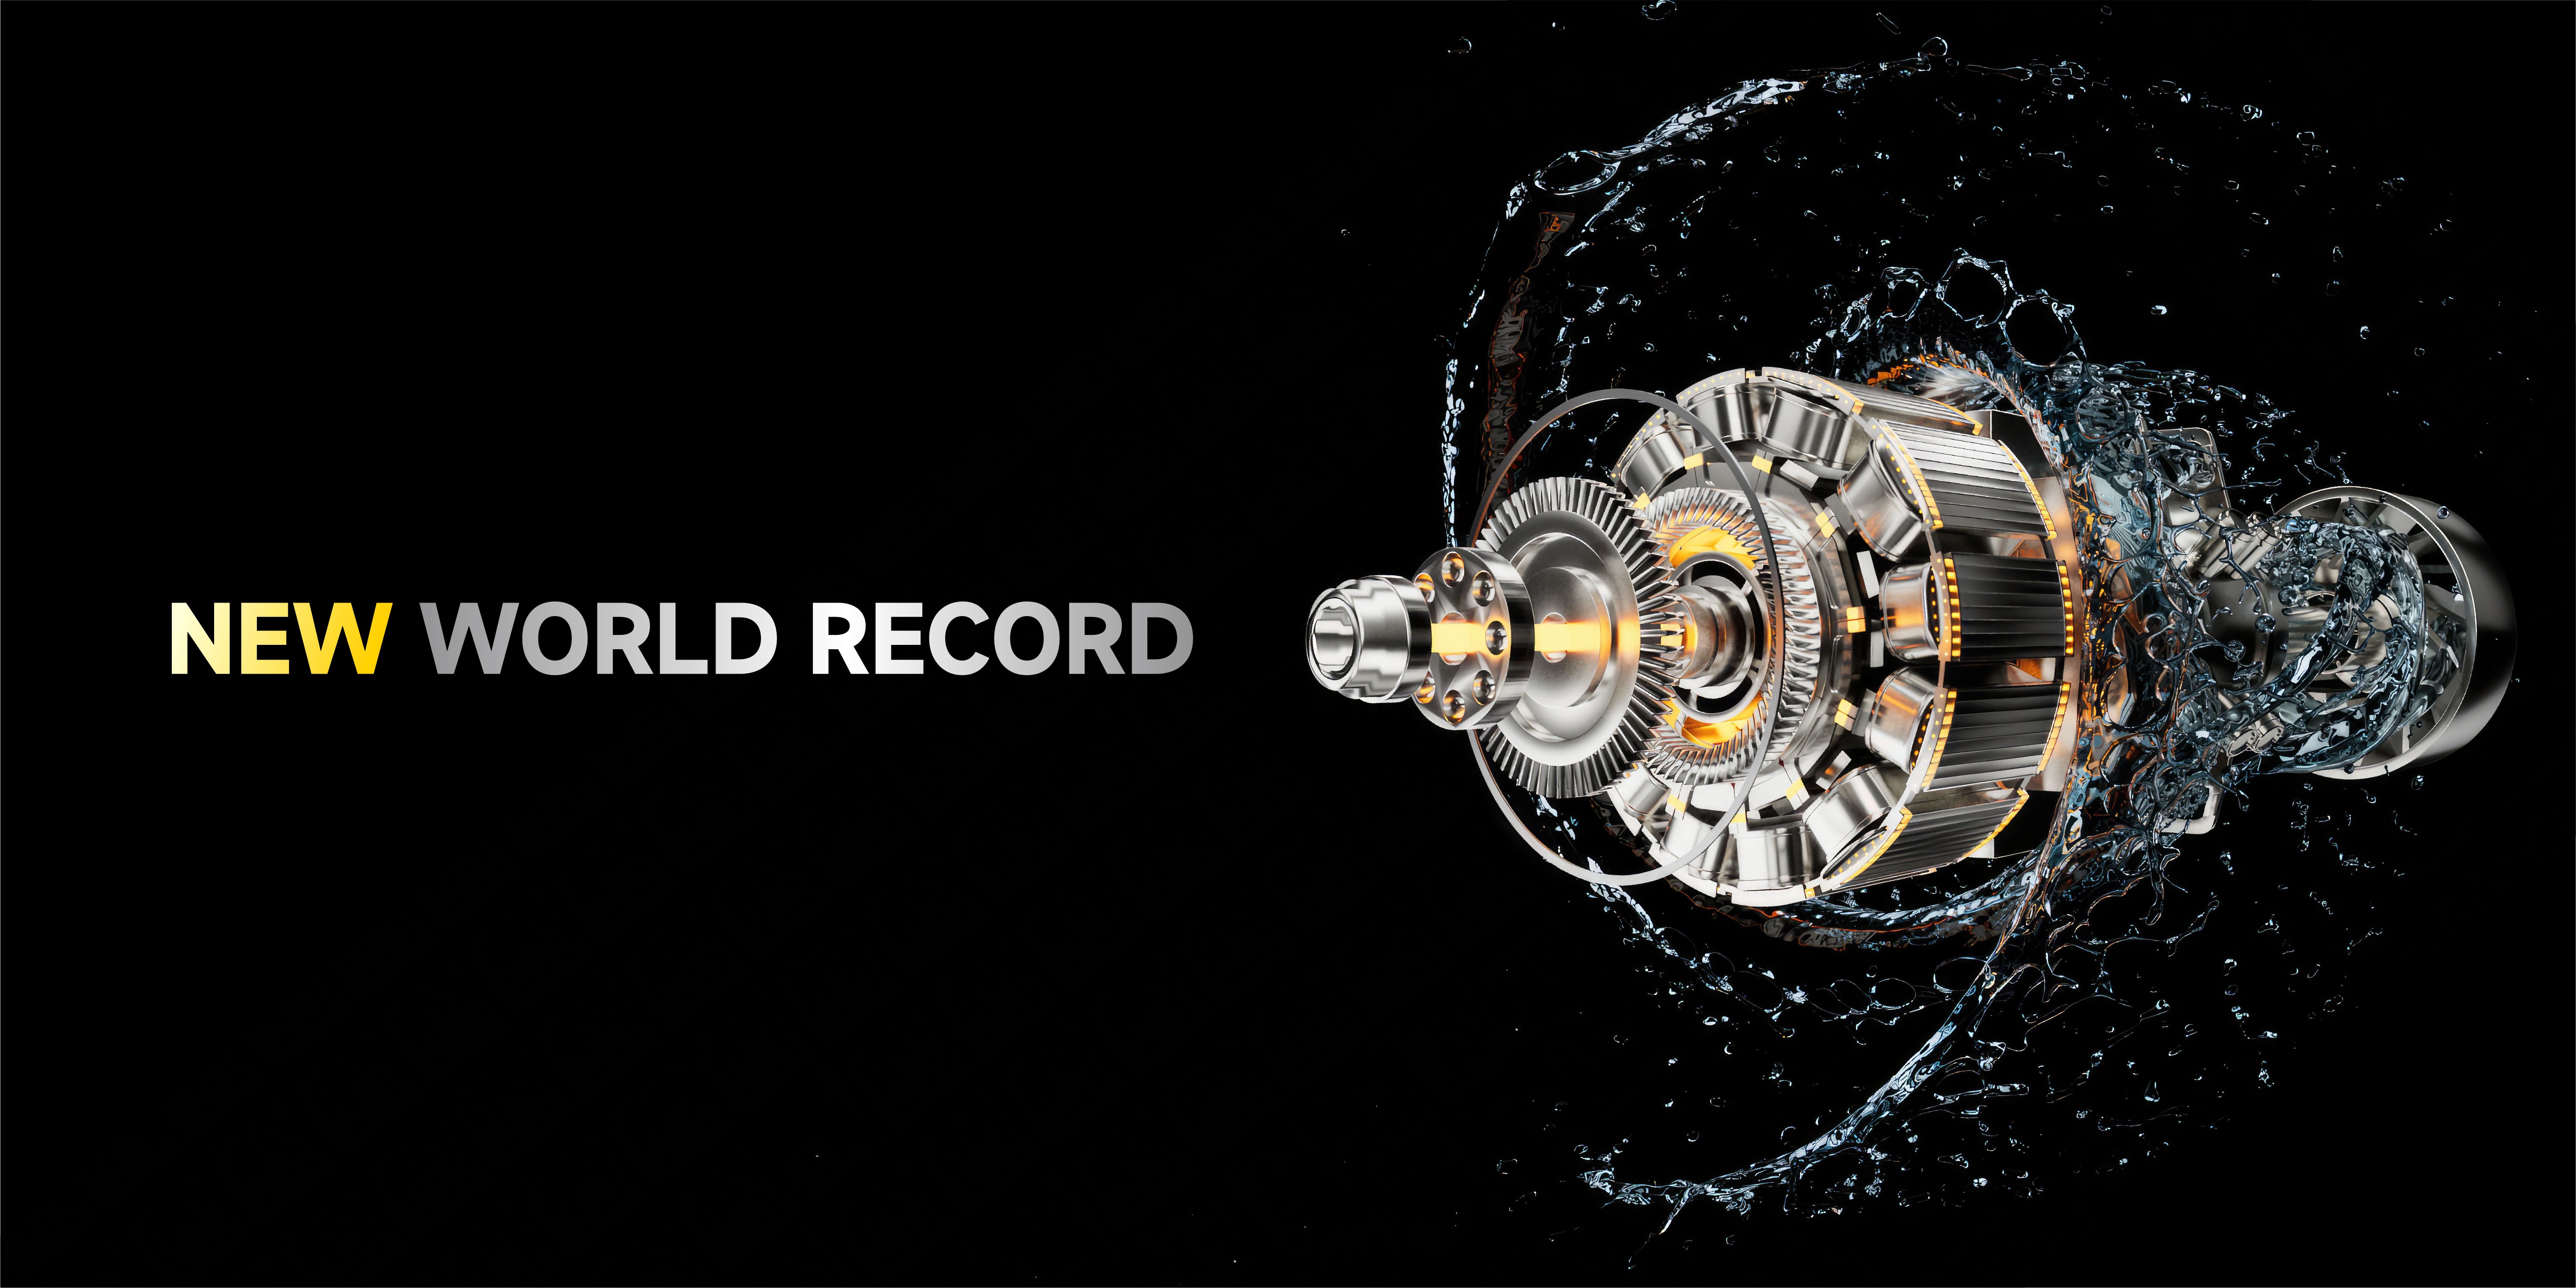 Witness Aquagem's New World Record at Piscina & Wellness Barcelona 2023